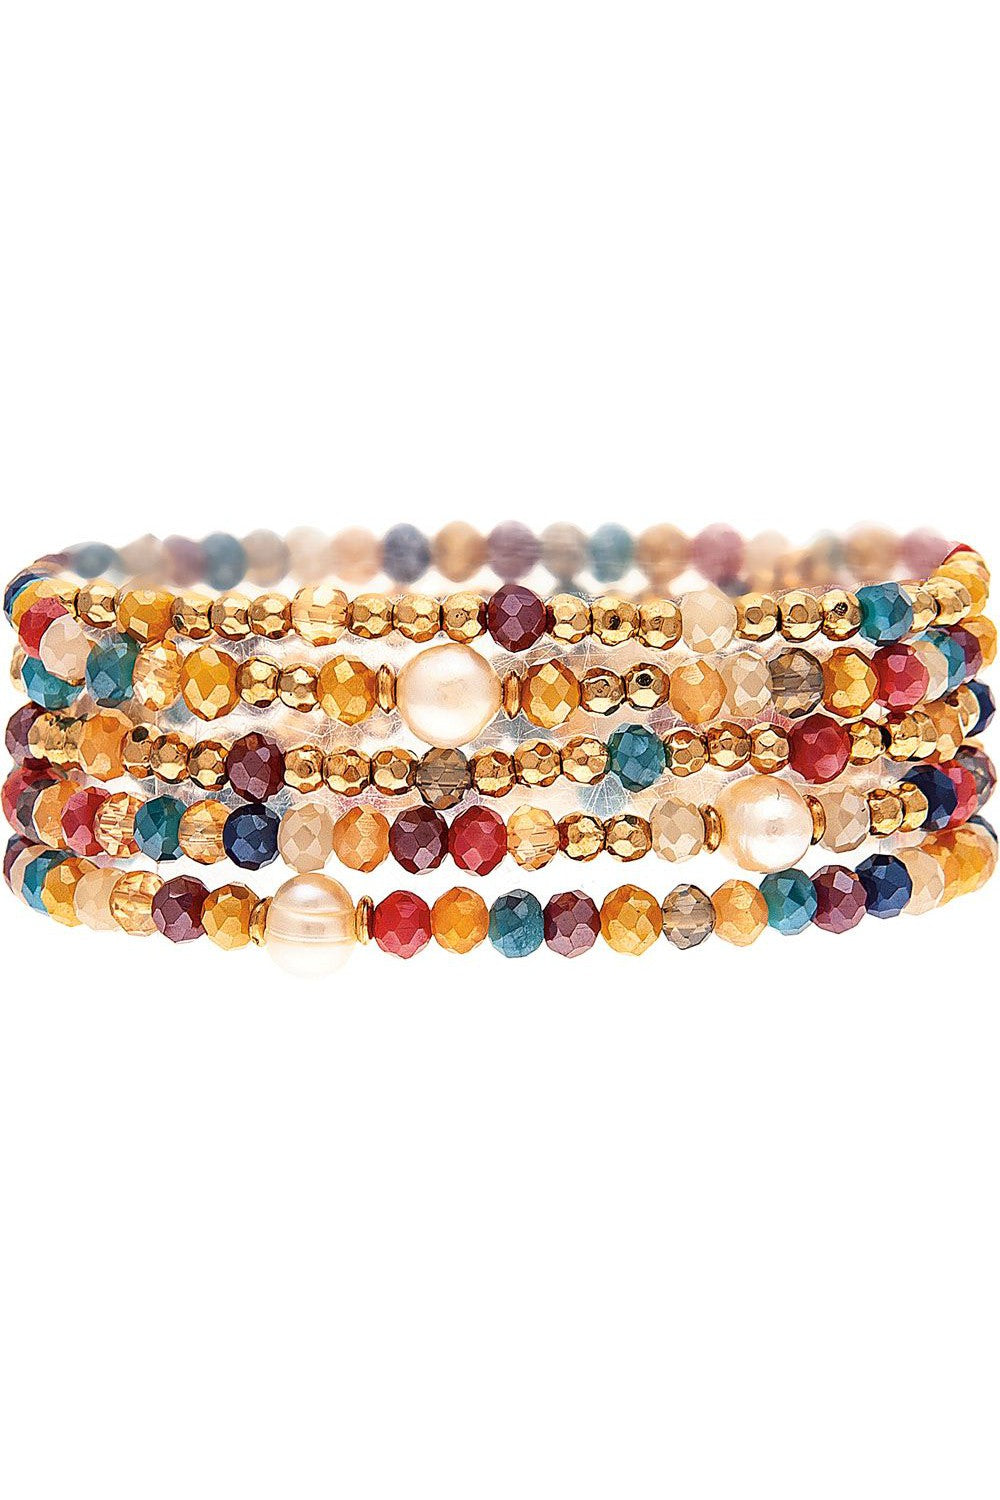 Rain Jewelry Gold Multicolor Stone Bead Bracelet Set